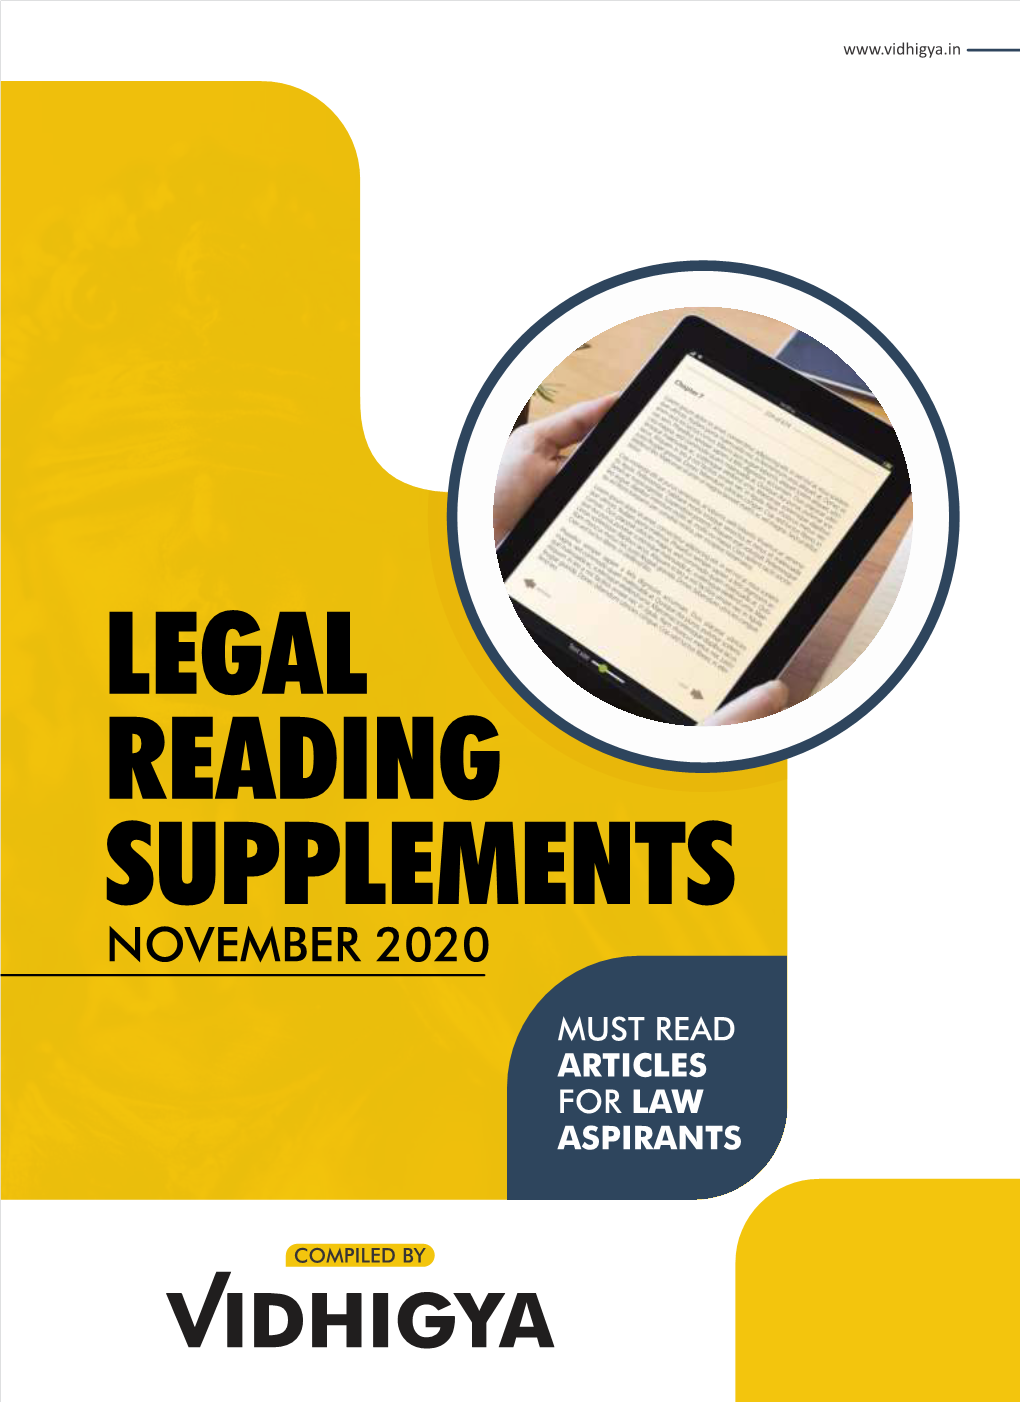 Vidhigya Legal Reading Supplements.Cdr